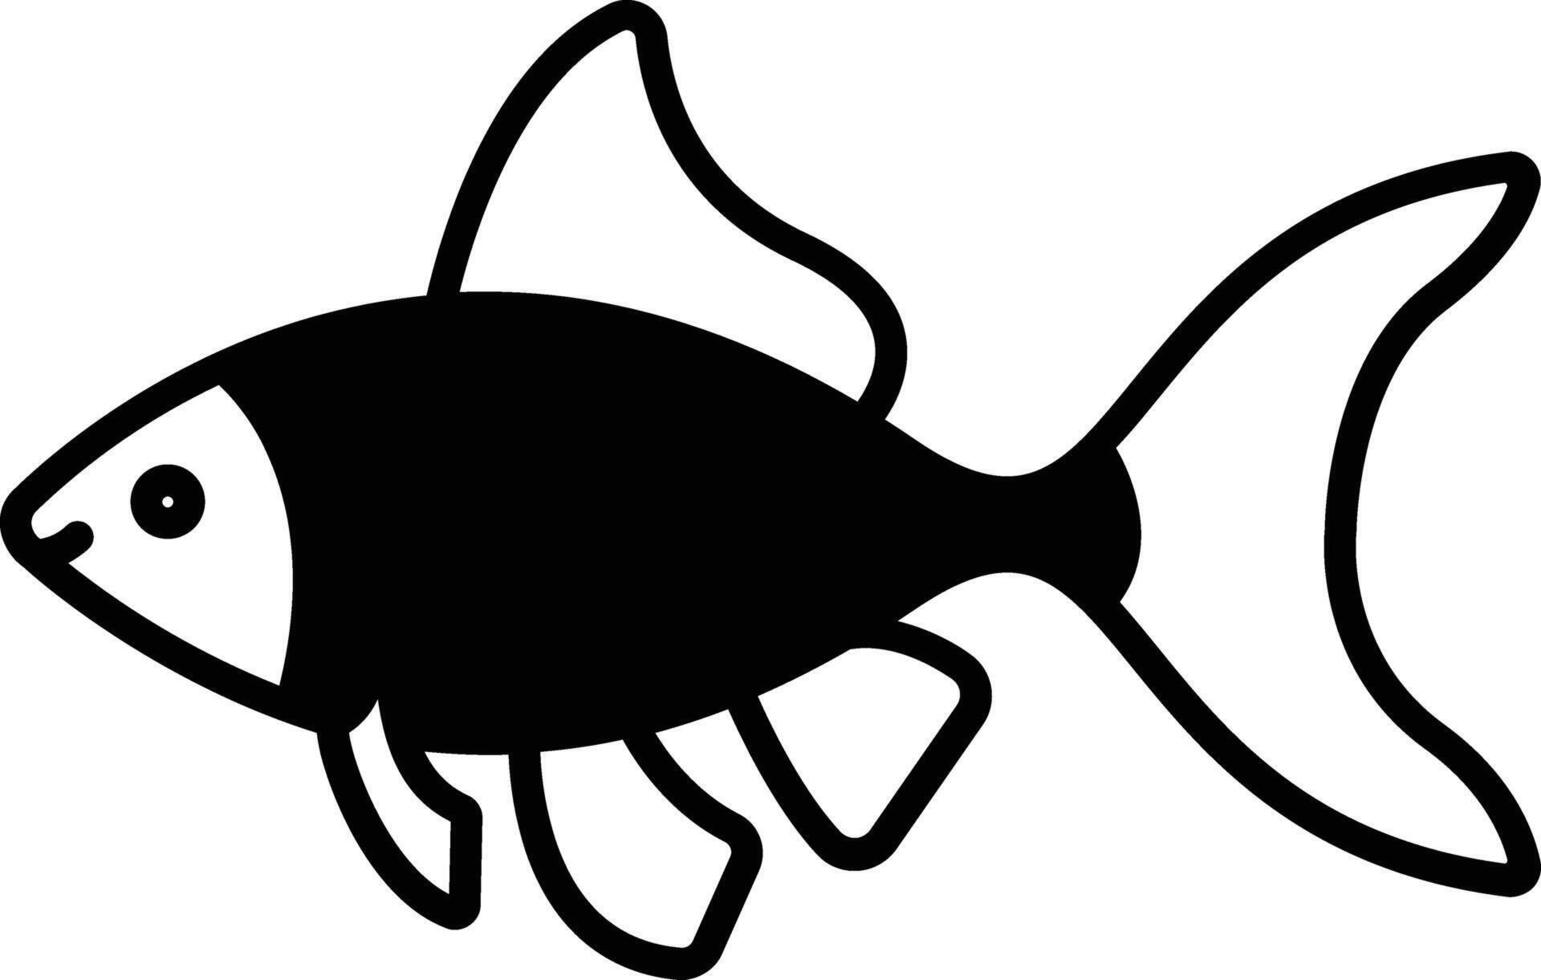 Tetra glofish glyph and line vector illustration